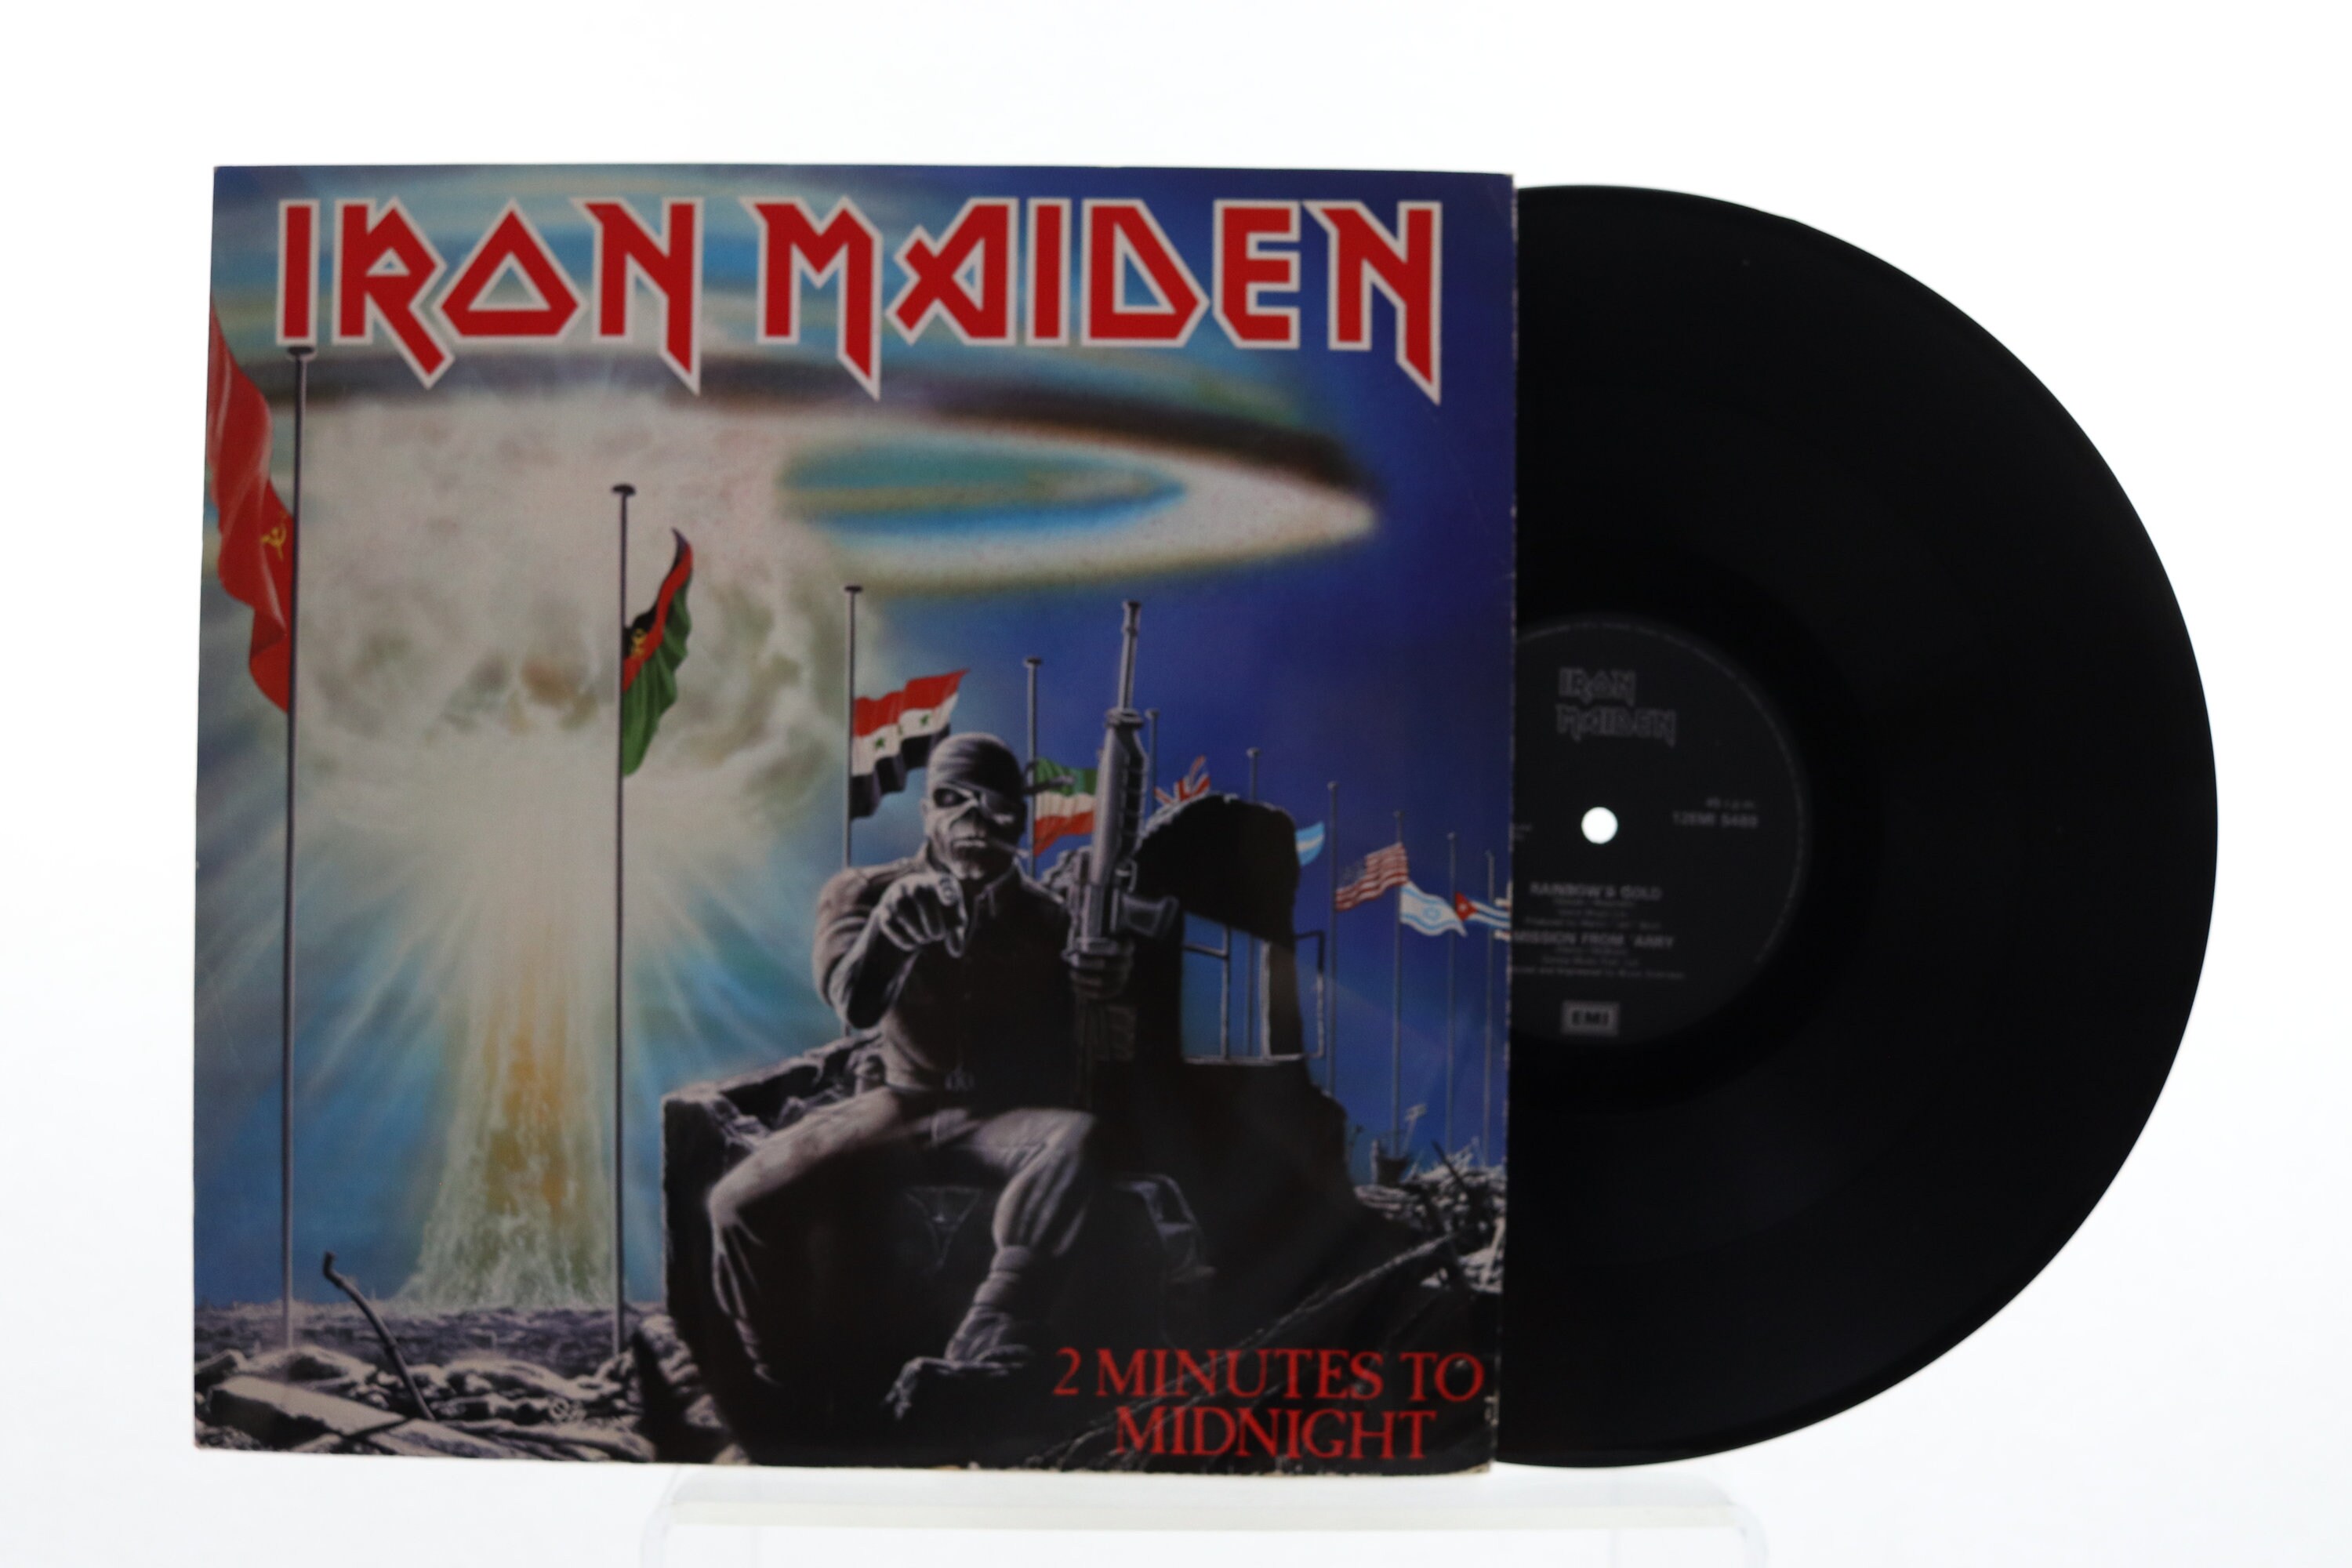 Borger lige ud Vulkan Iron Maiden 2 Minutes to Midnight 12 Single Vinyl Record - Etsy Ireland